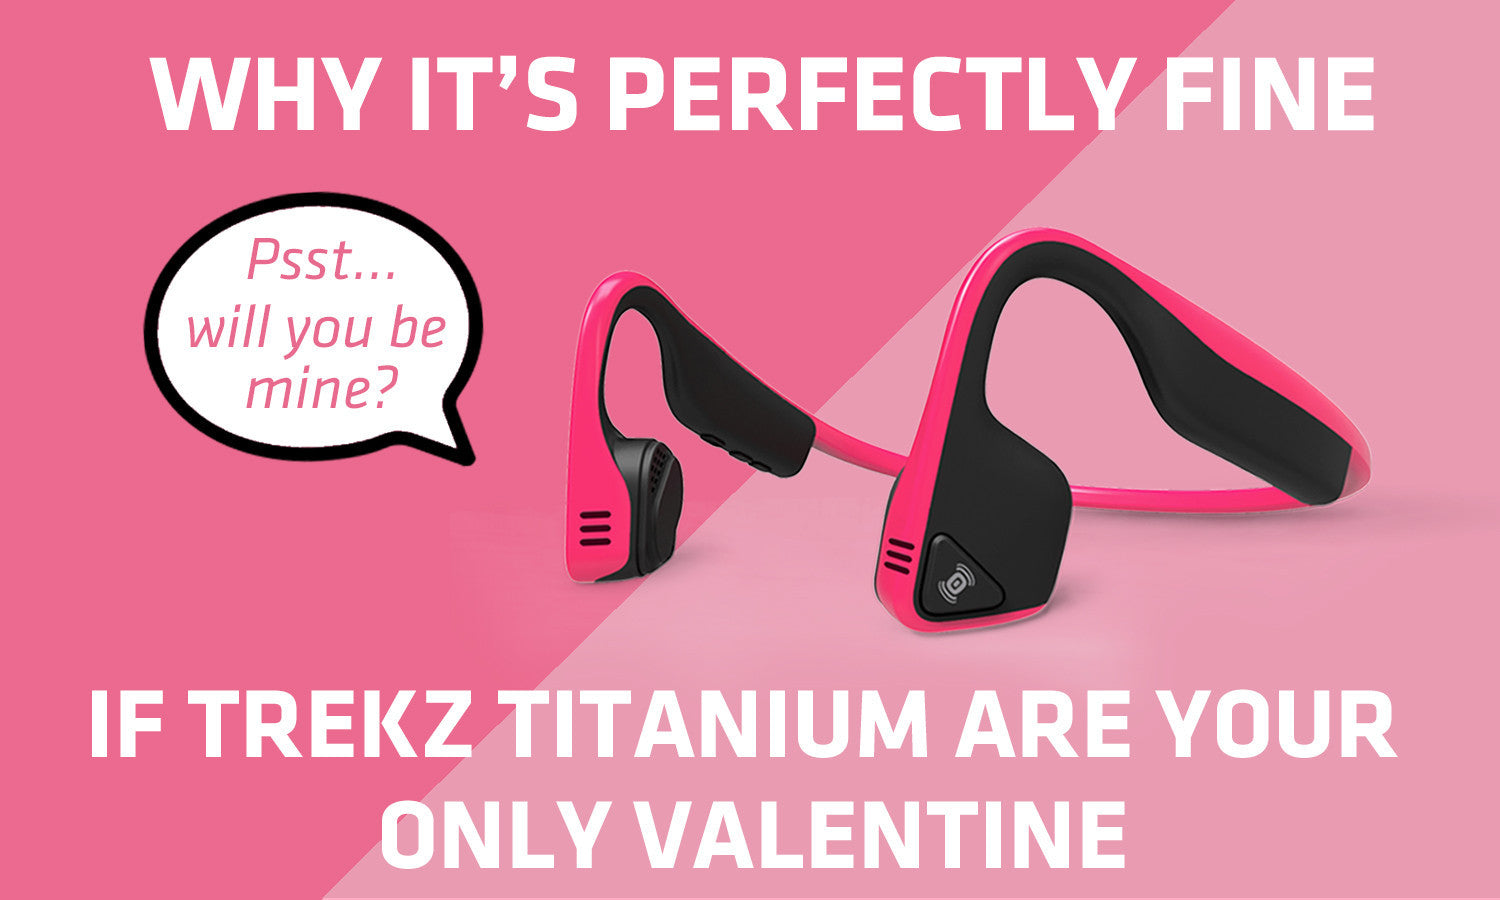 Why It’s Totally Fine If Trekz Titanium Are Your Valentine